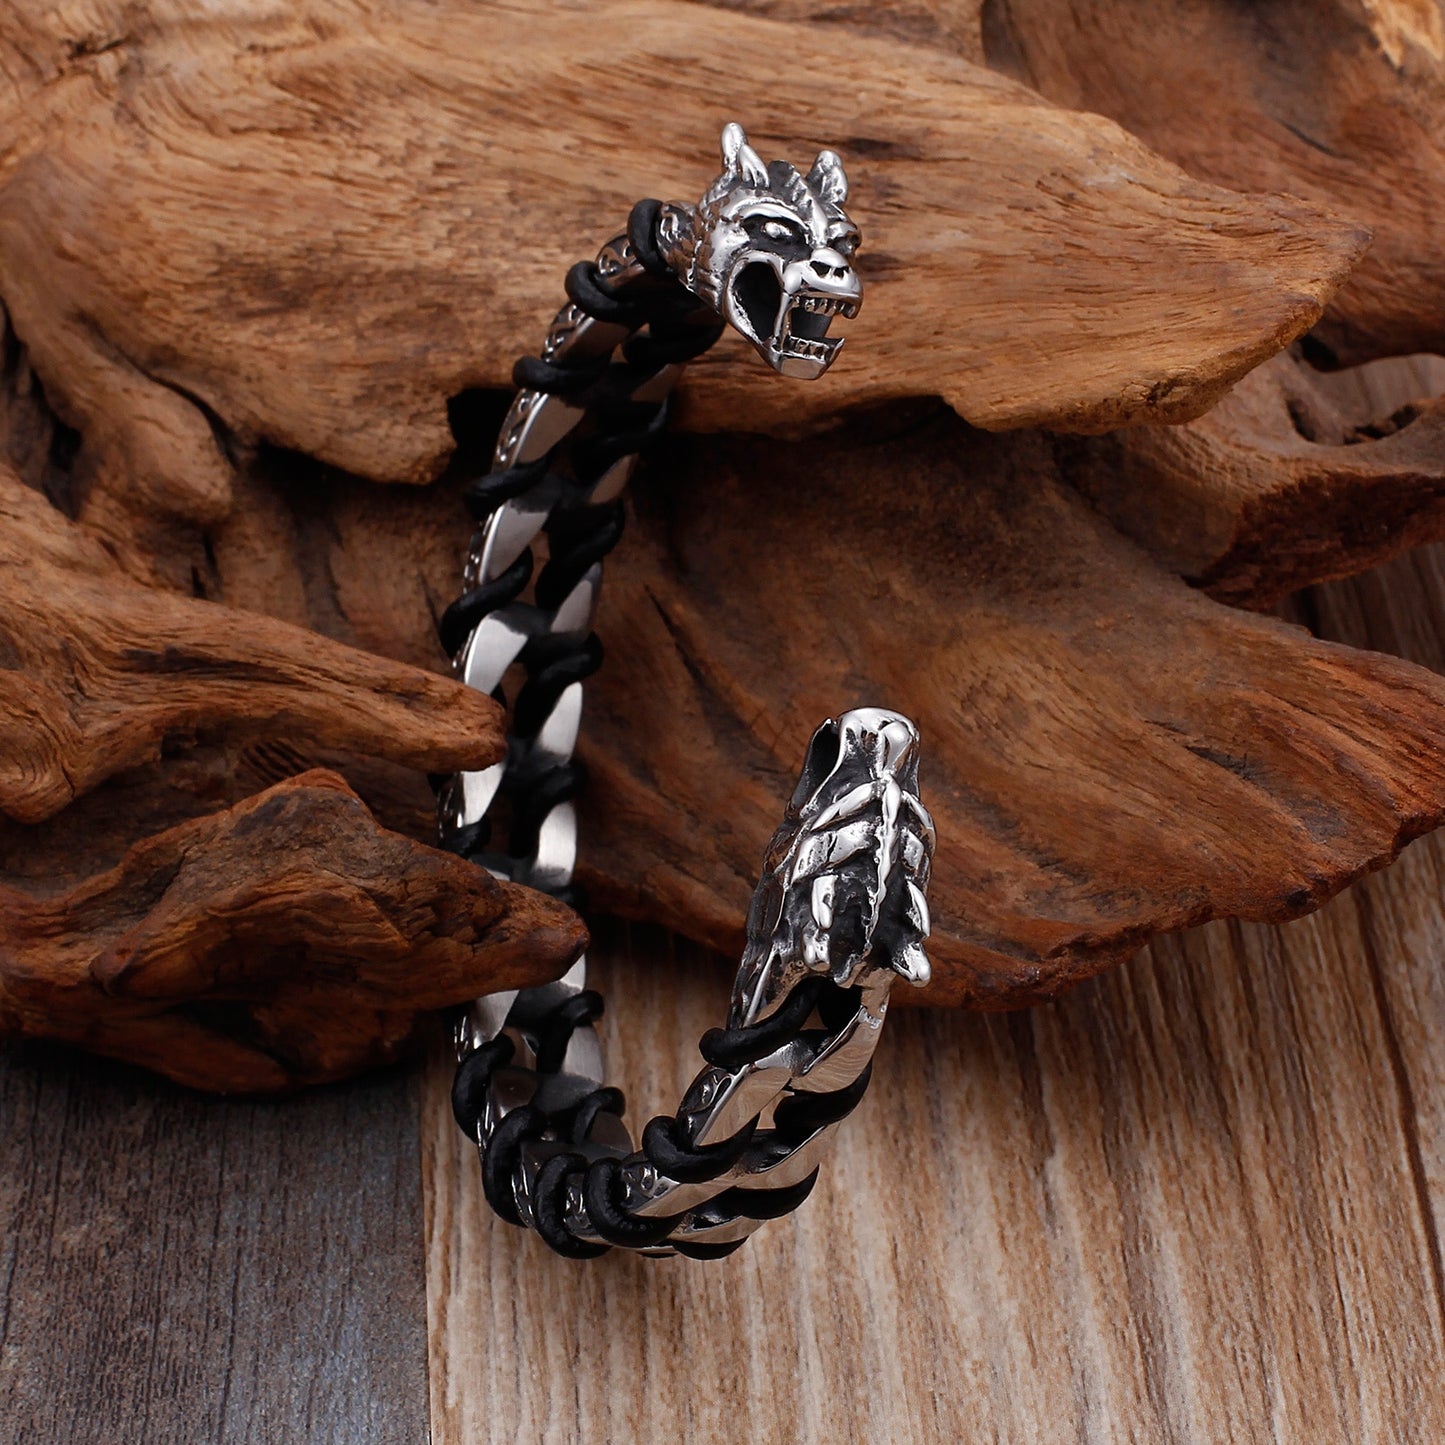 Dragon Steel and Leather Bangle Bracelet